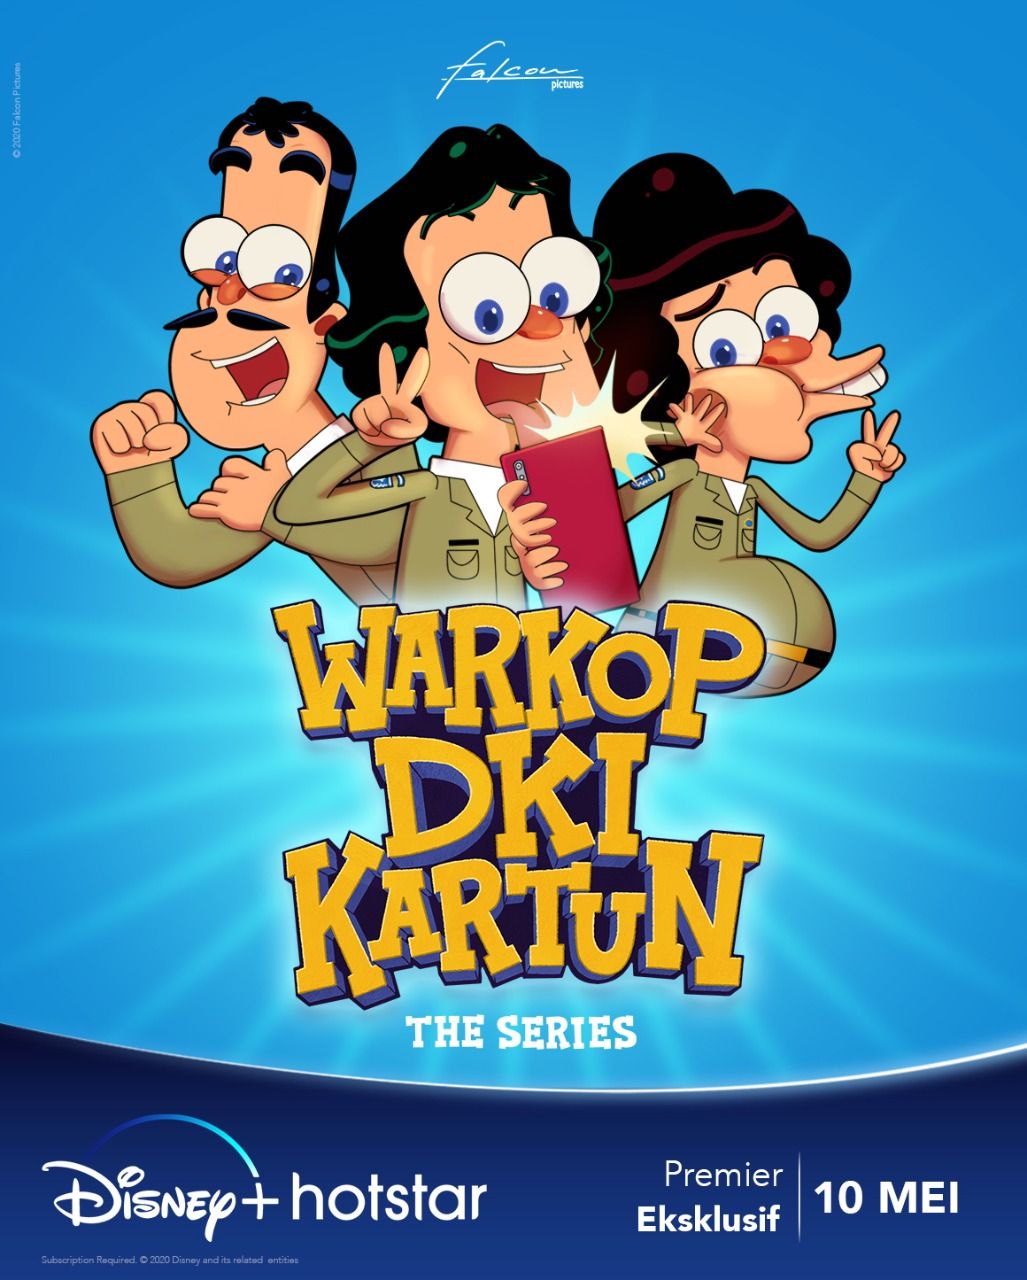 Warkop DKI Kartun The Series